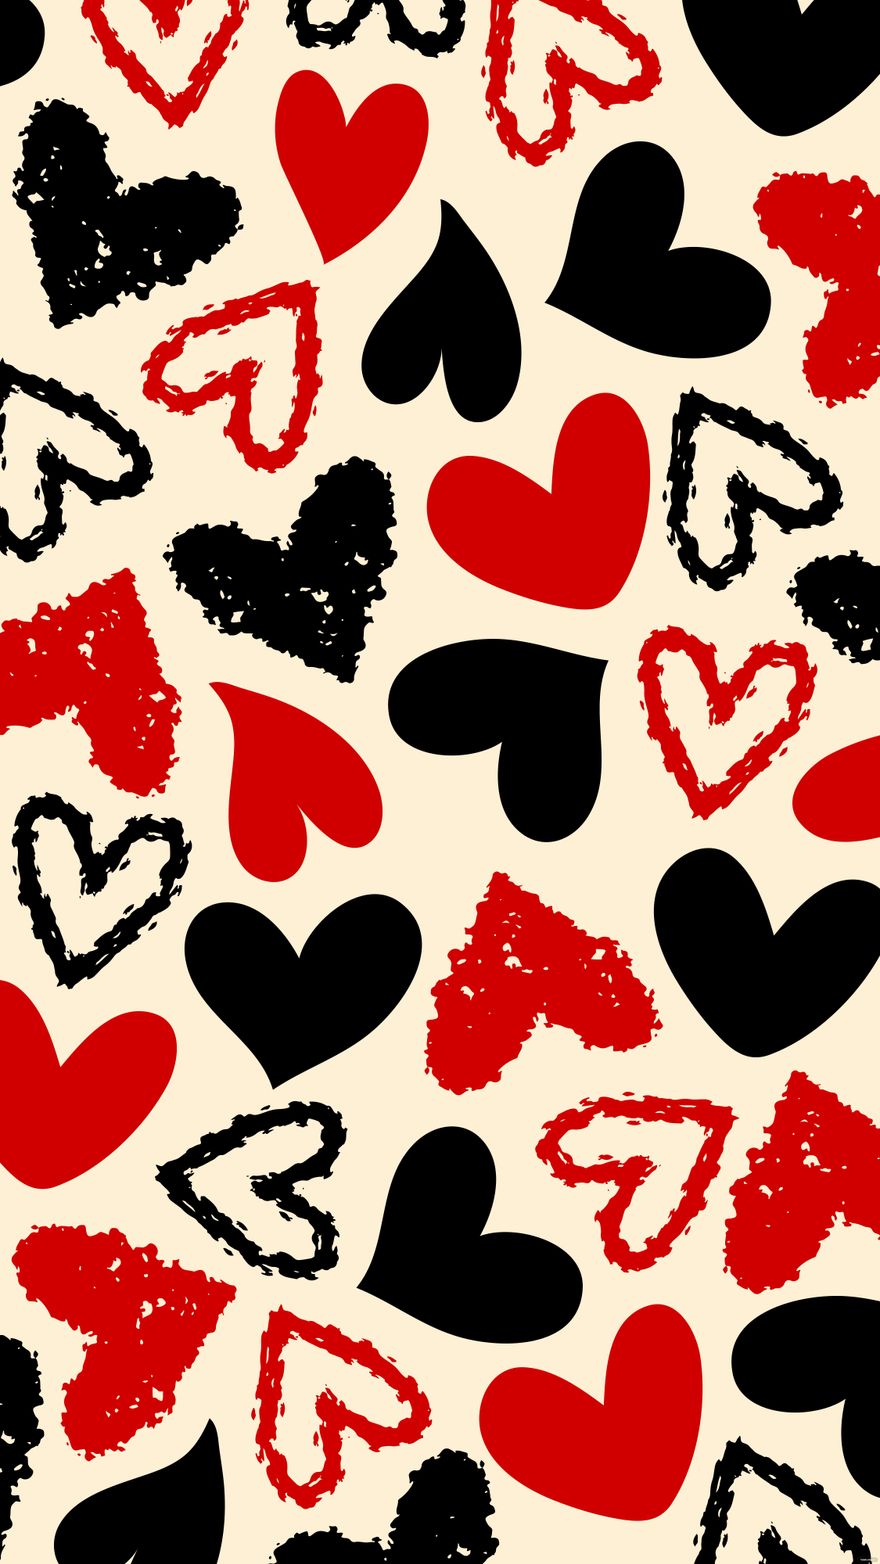 Free Red and Black Heart Background - EPS, Illustrator, JPG, SVG ...